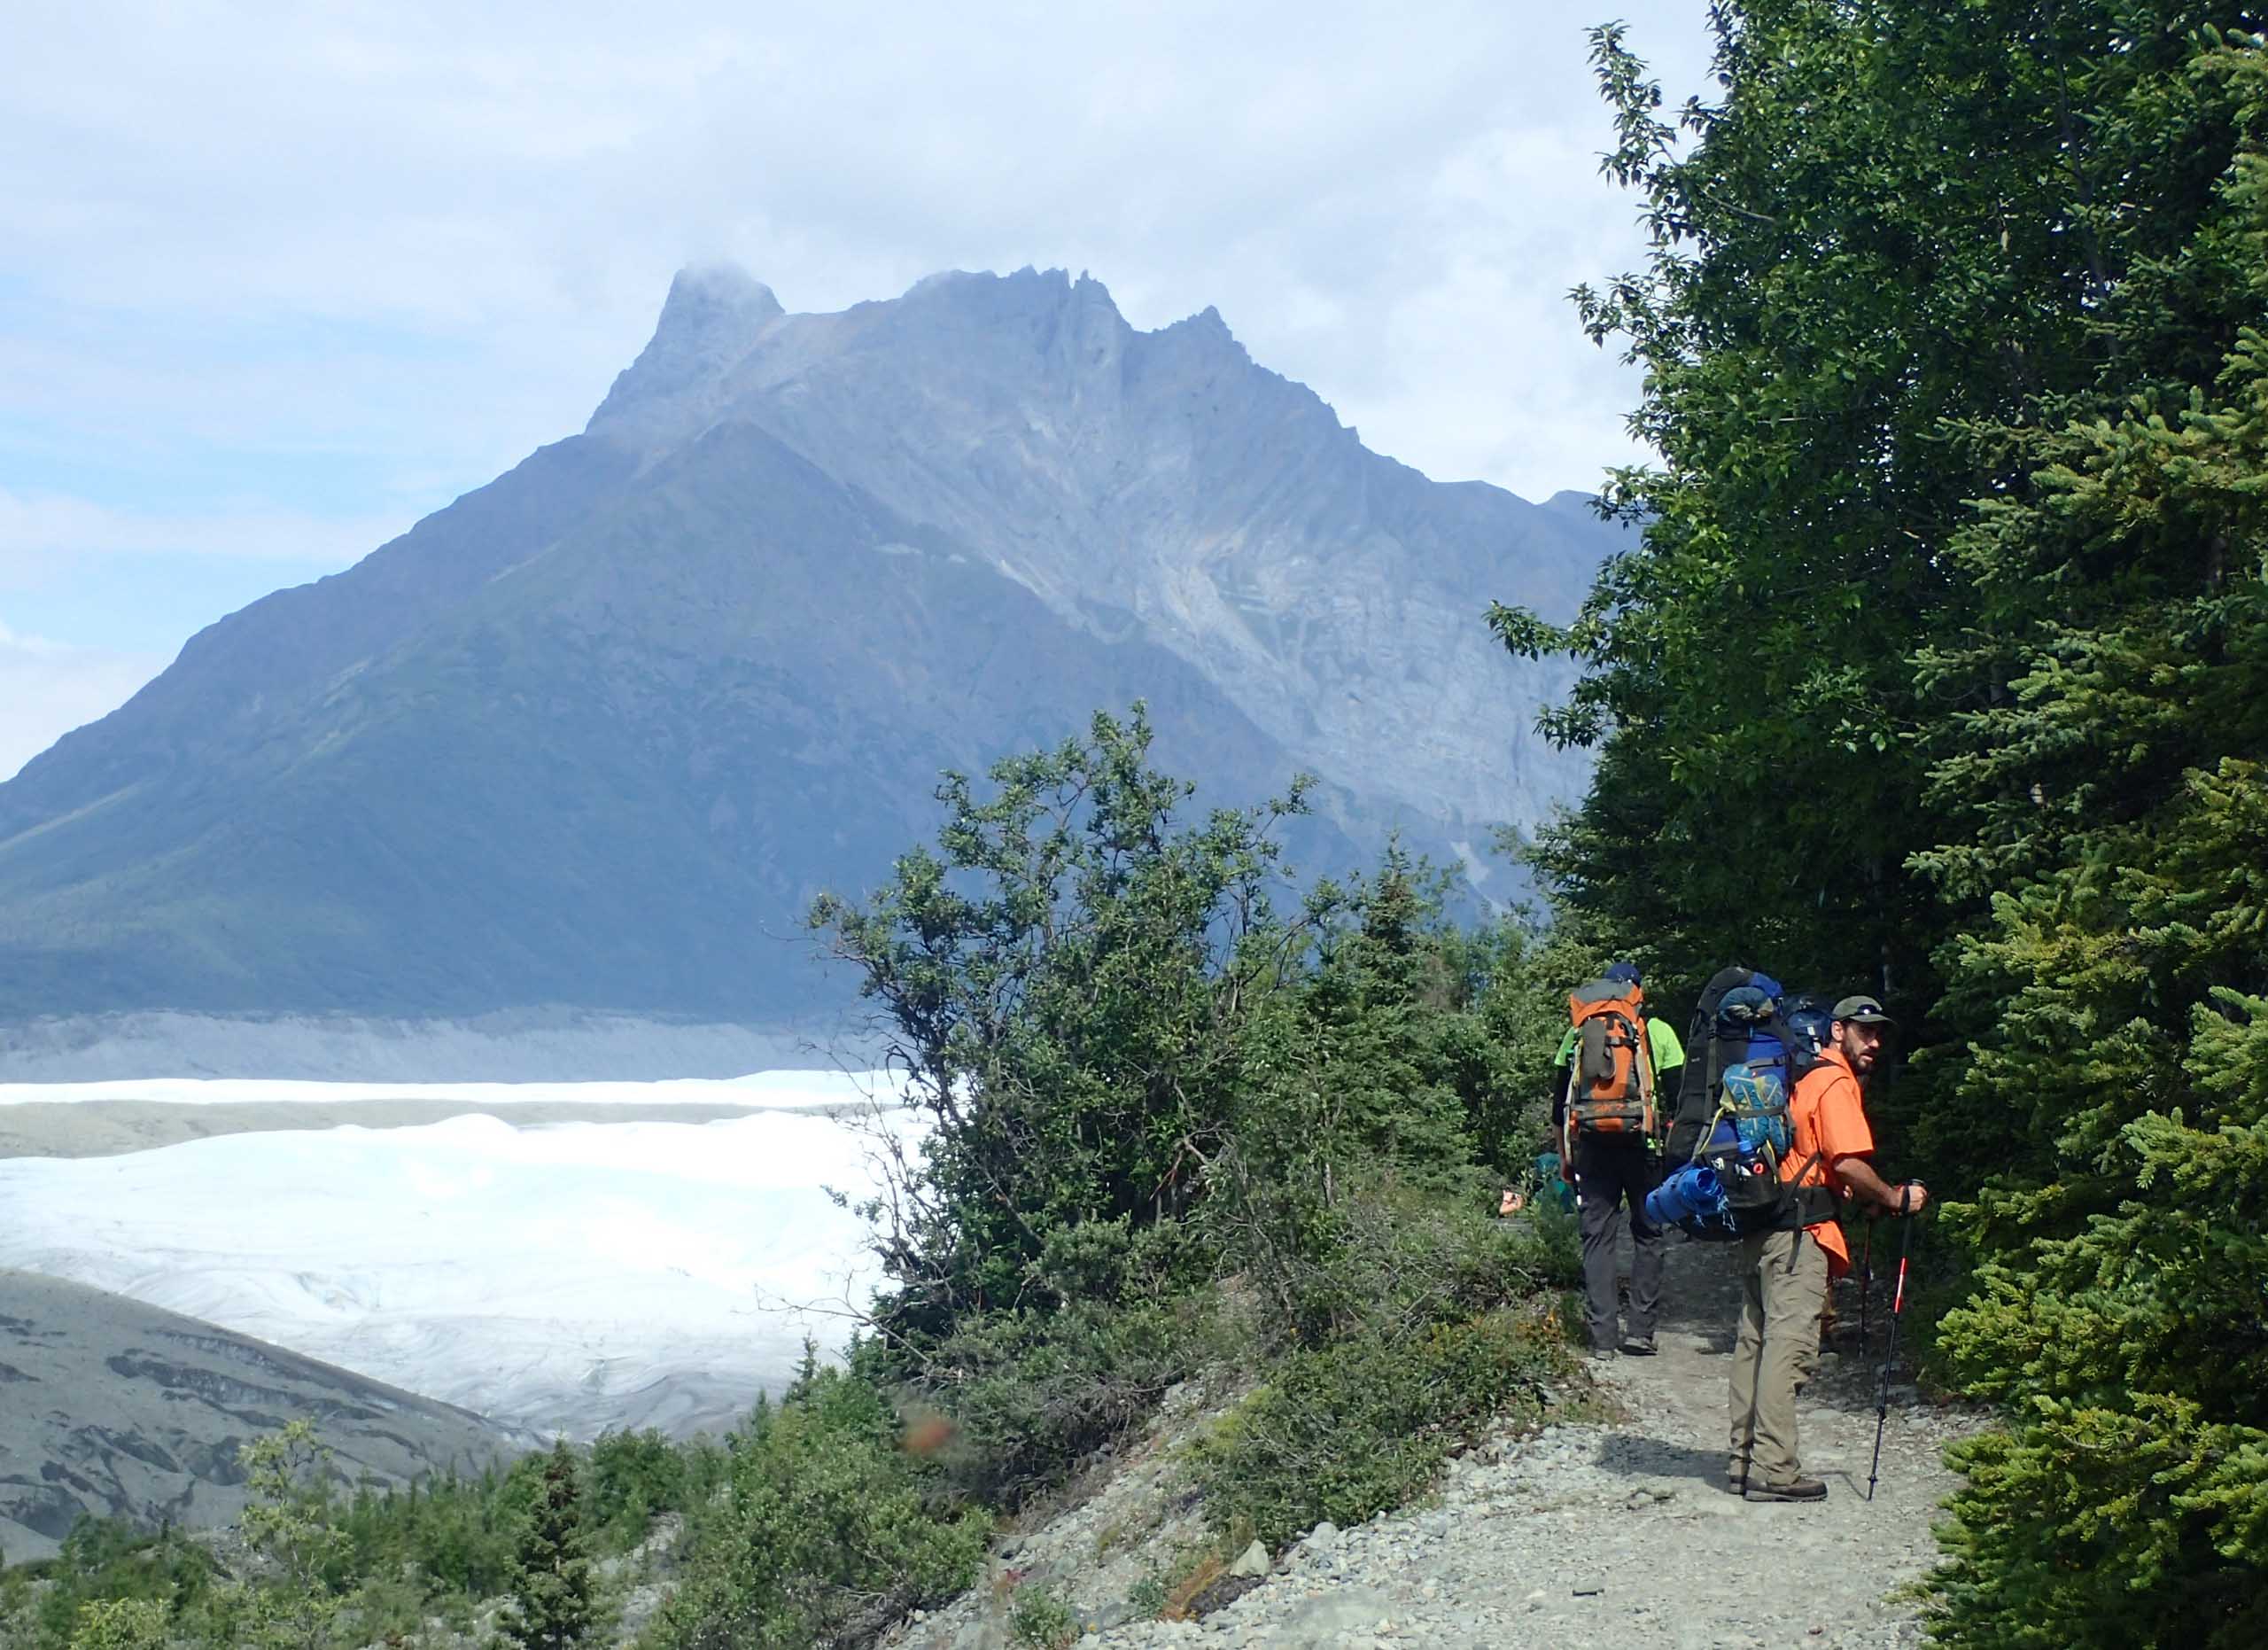 People on a hiking trail alongside a mountain view.